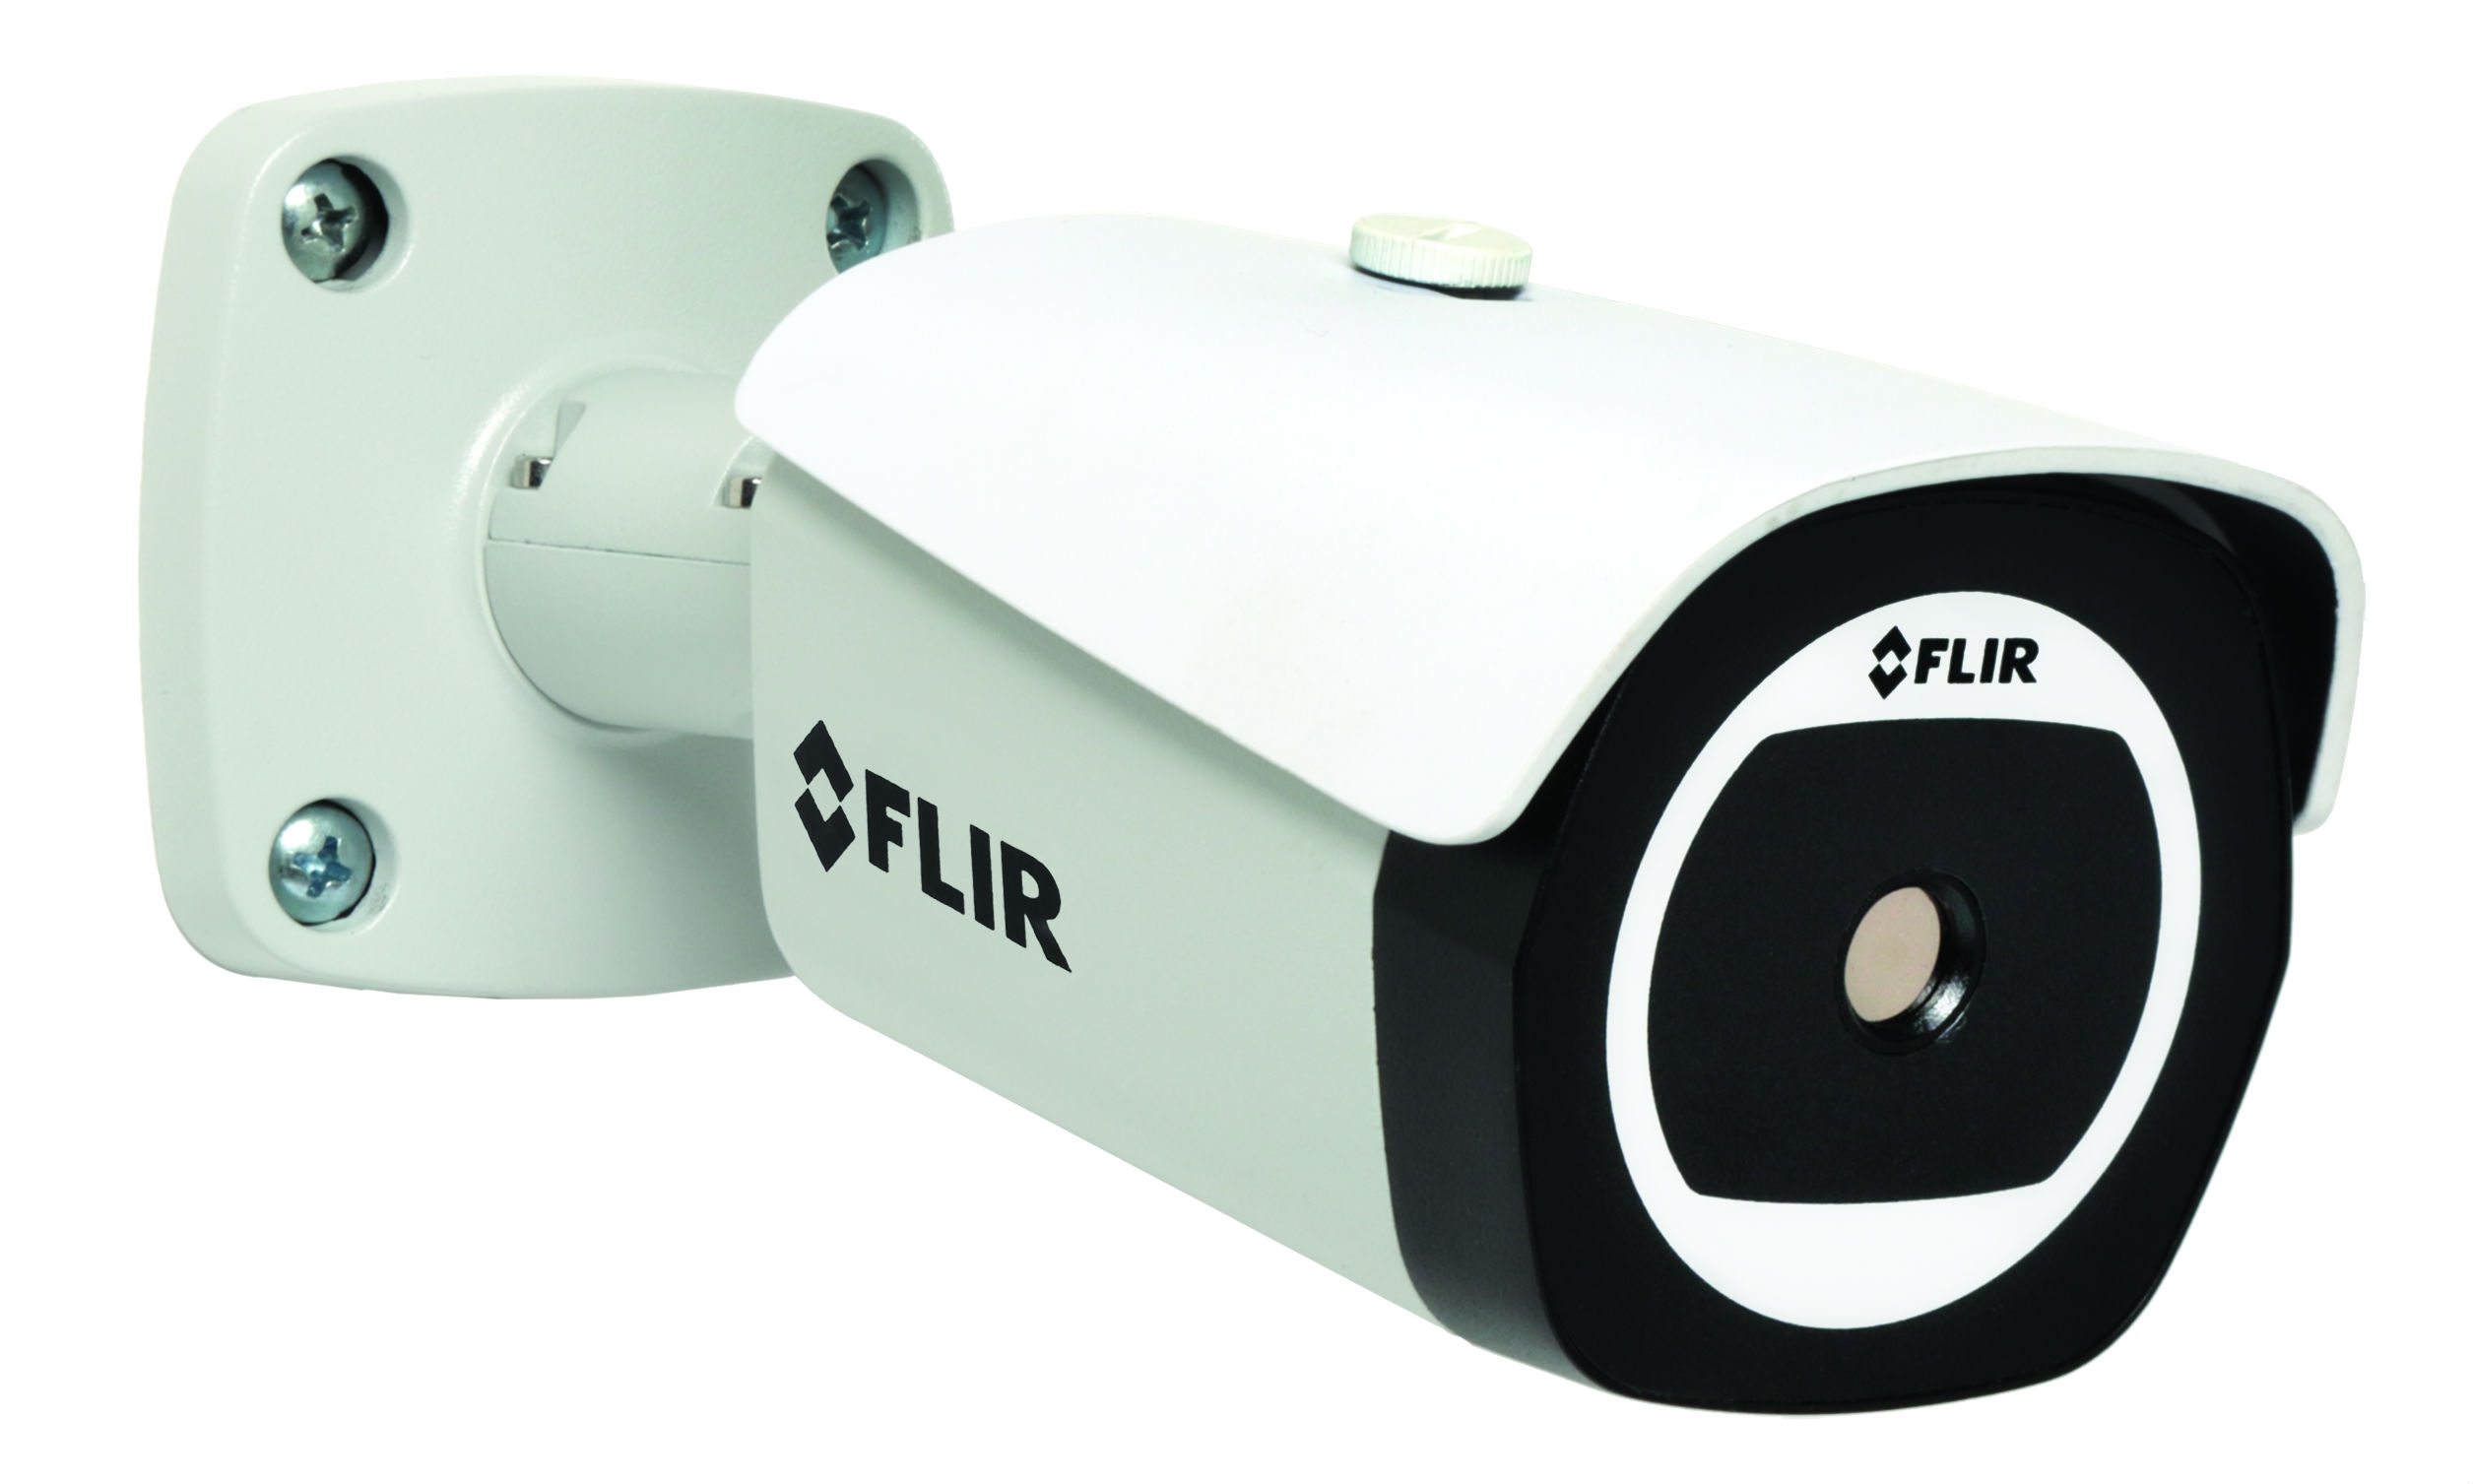 FLIR launches new TCX Thermal Mini Bullet camera at IFSEC 2015